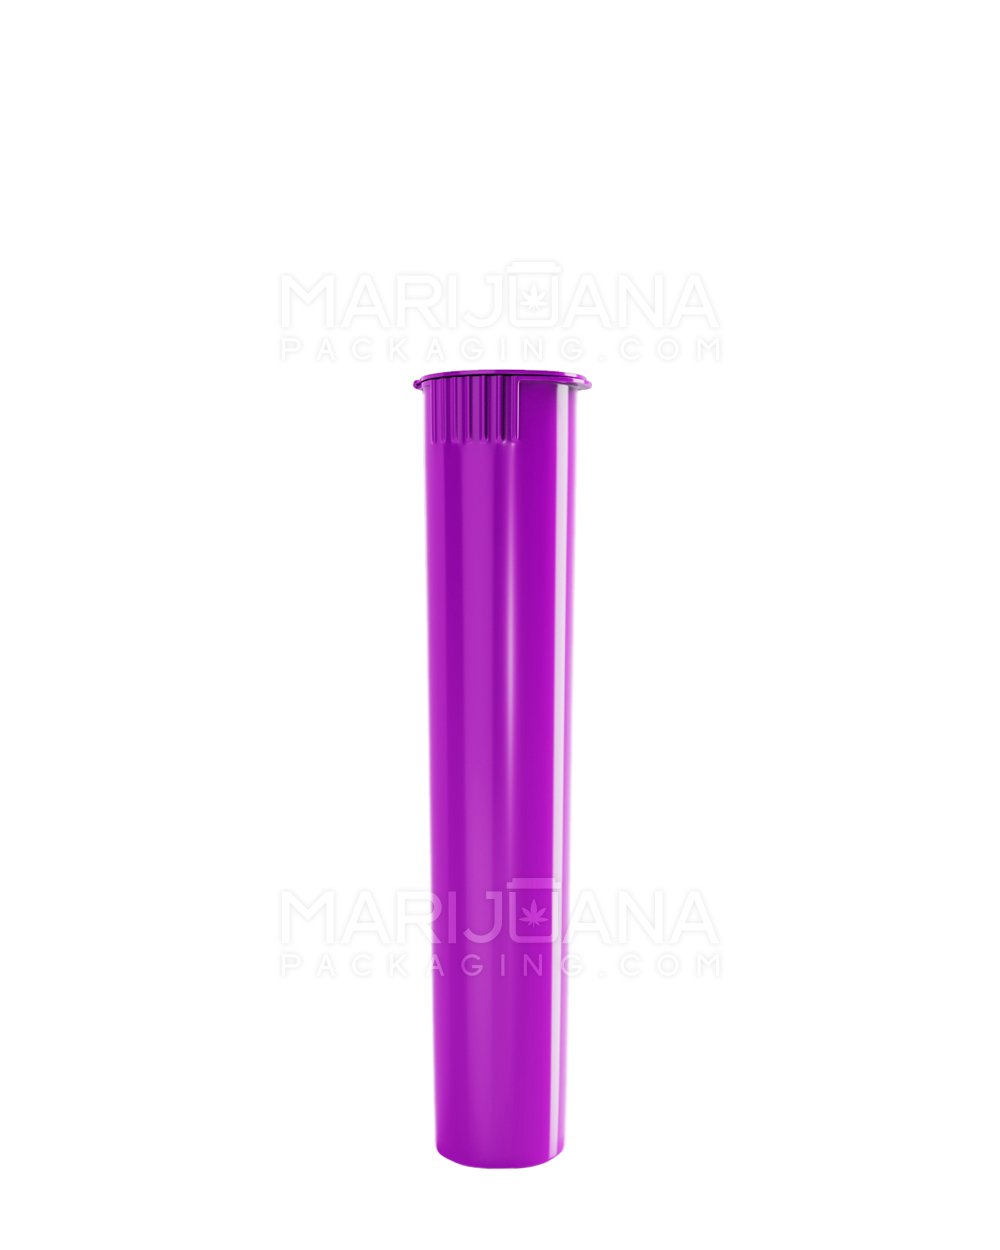 Child Resistant | Pop Top Opaque Plastic Pre-Roll Tubes | 95mm - Purple - 1000 Count - 2